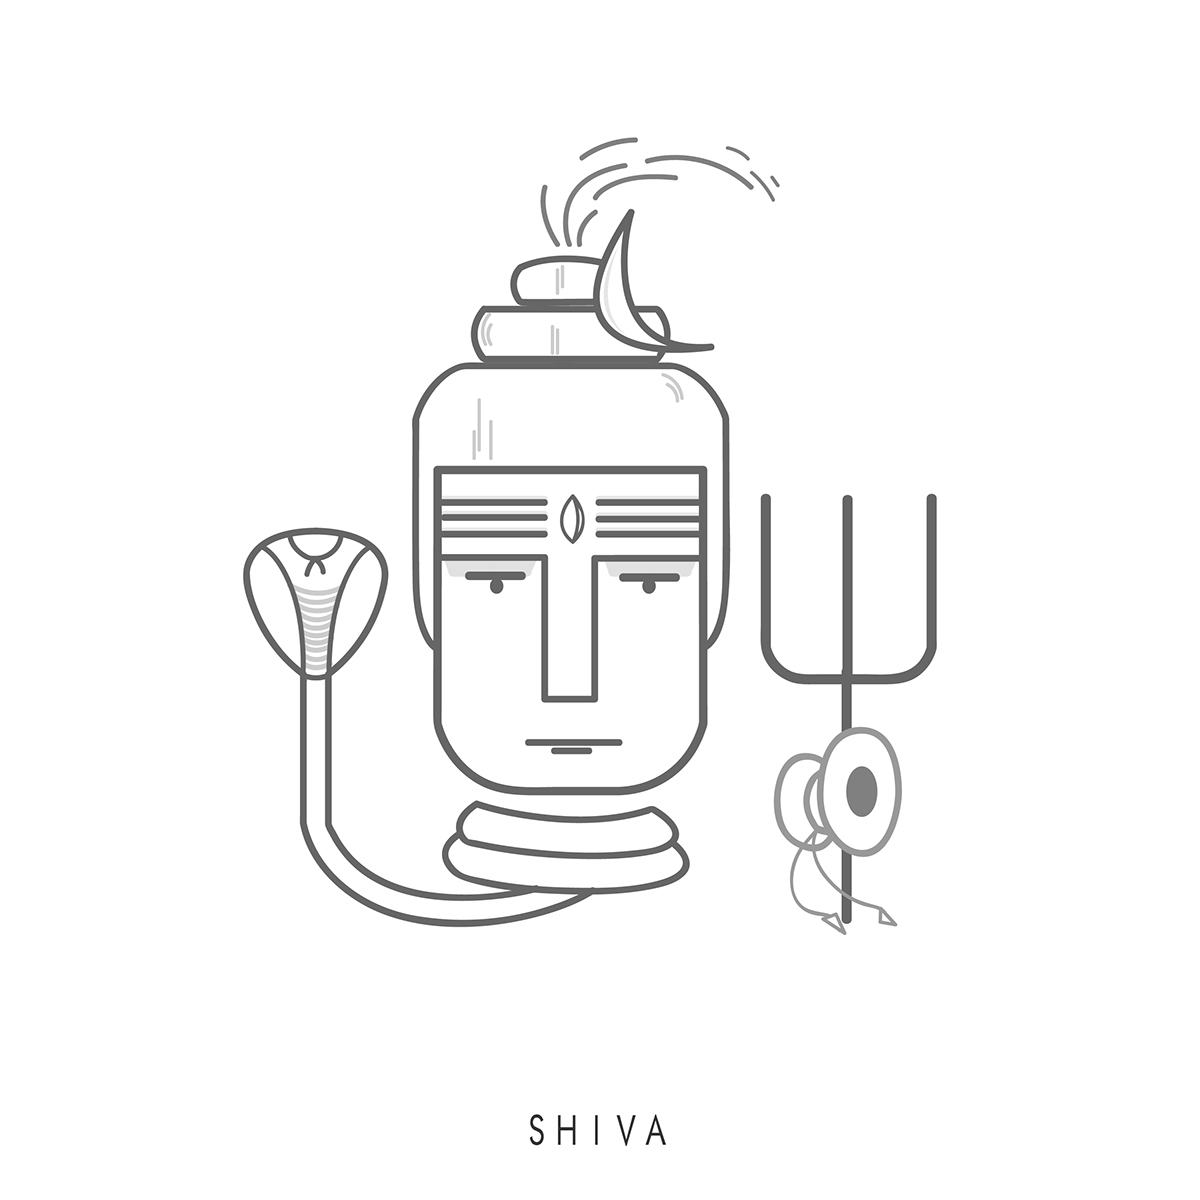 Hindu hindu gods indiangods gods India Illustrator vector art